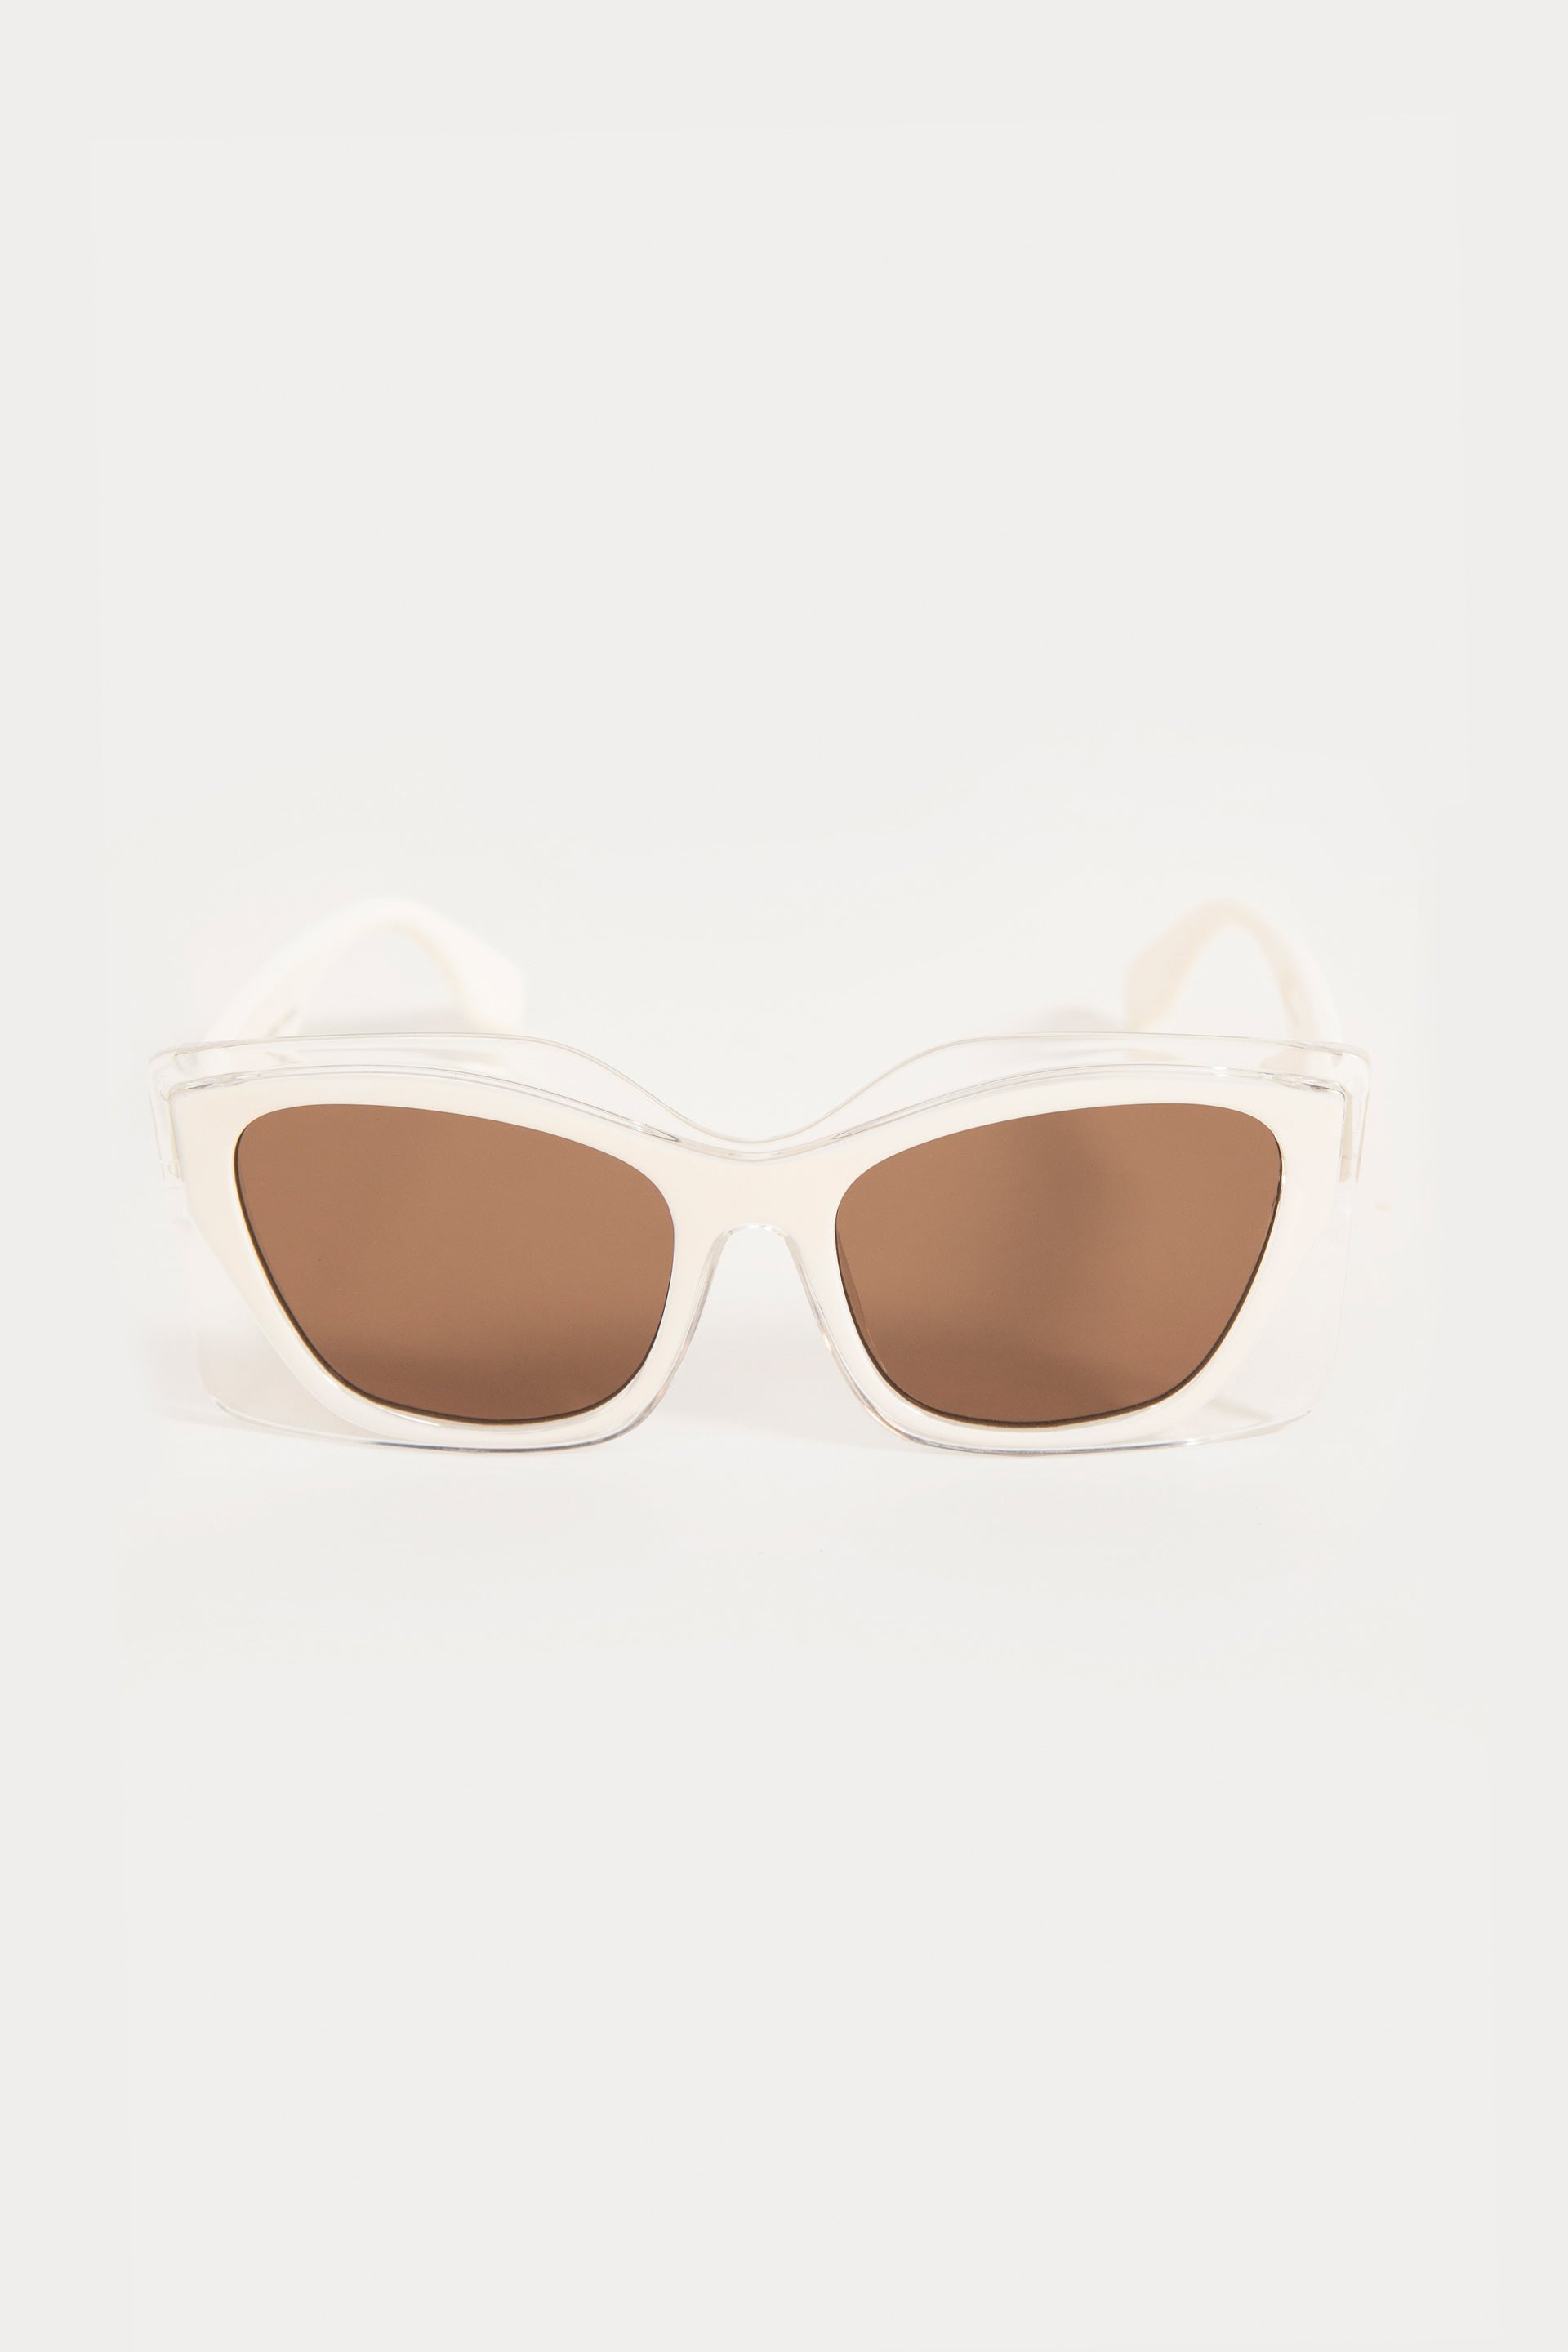 Shiny Solid White Sunglasses